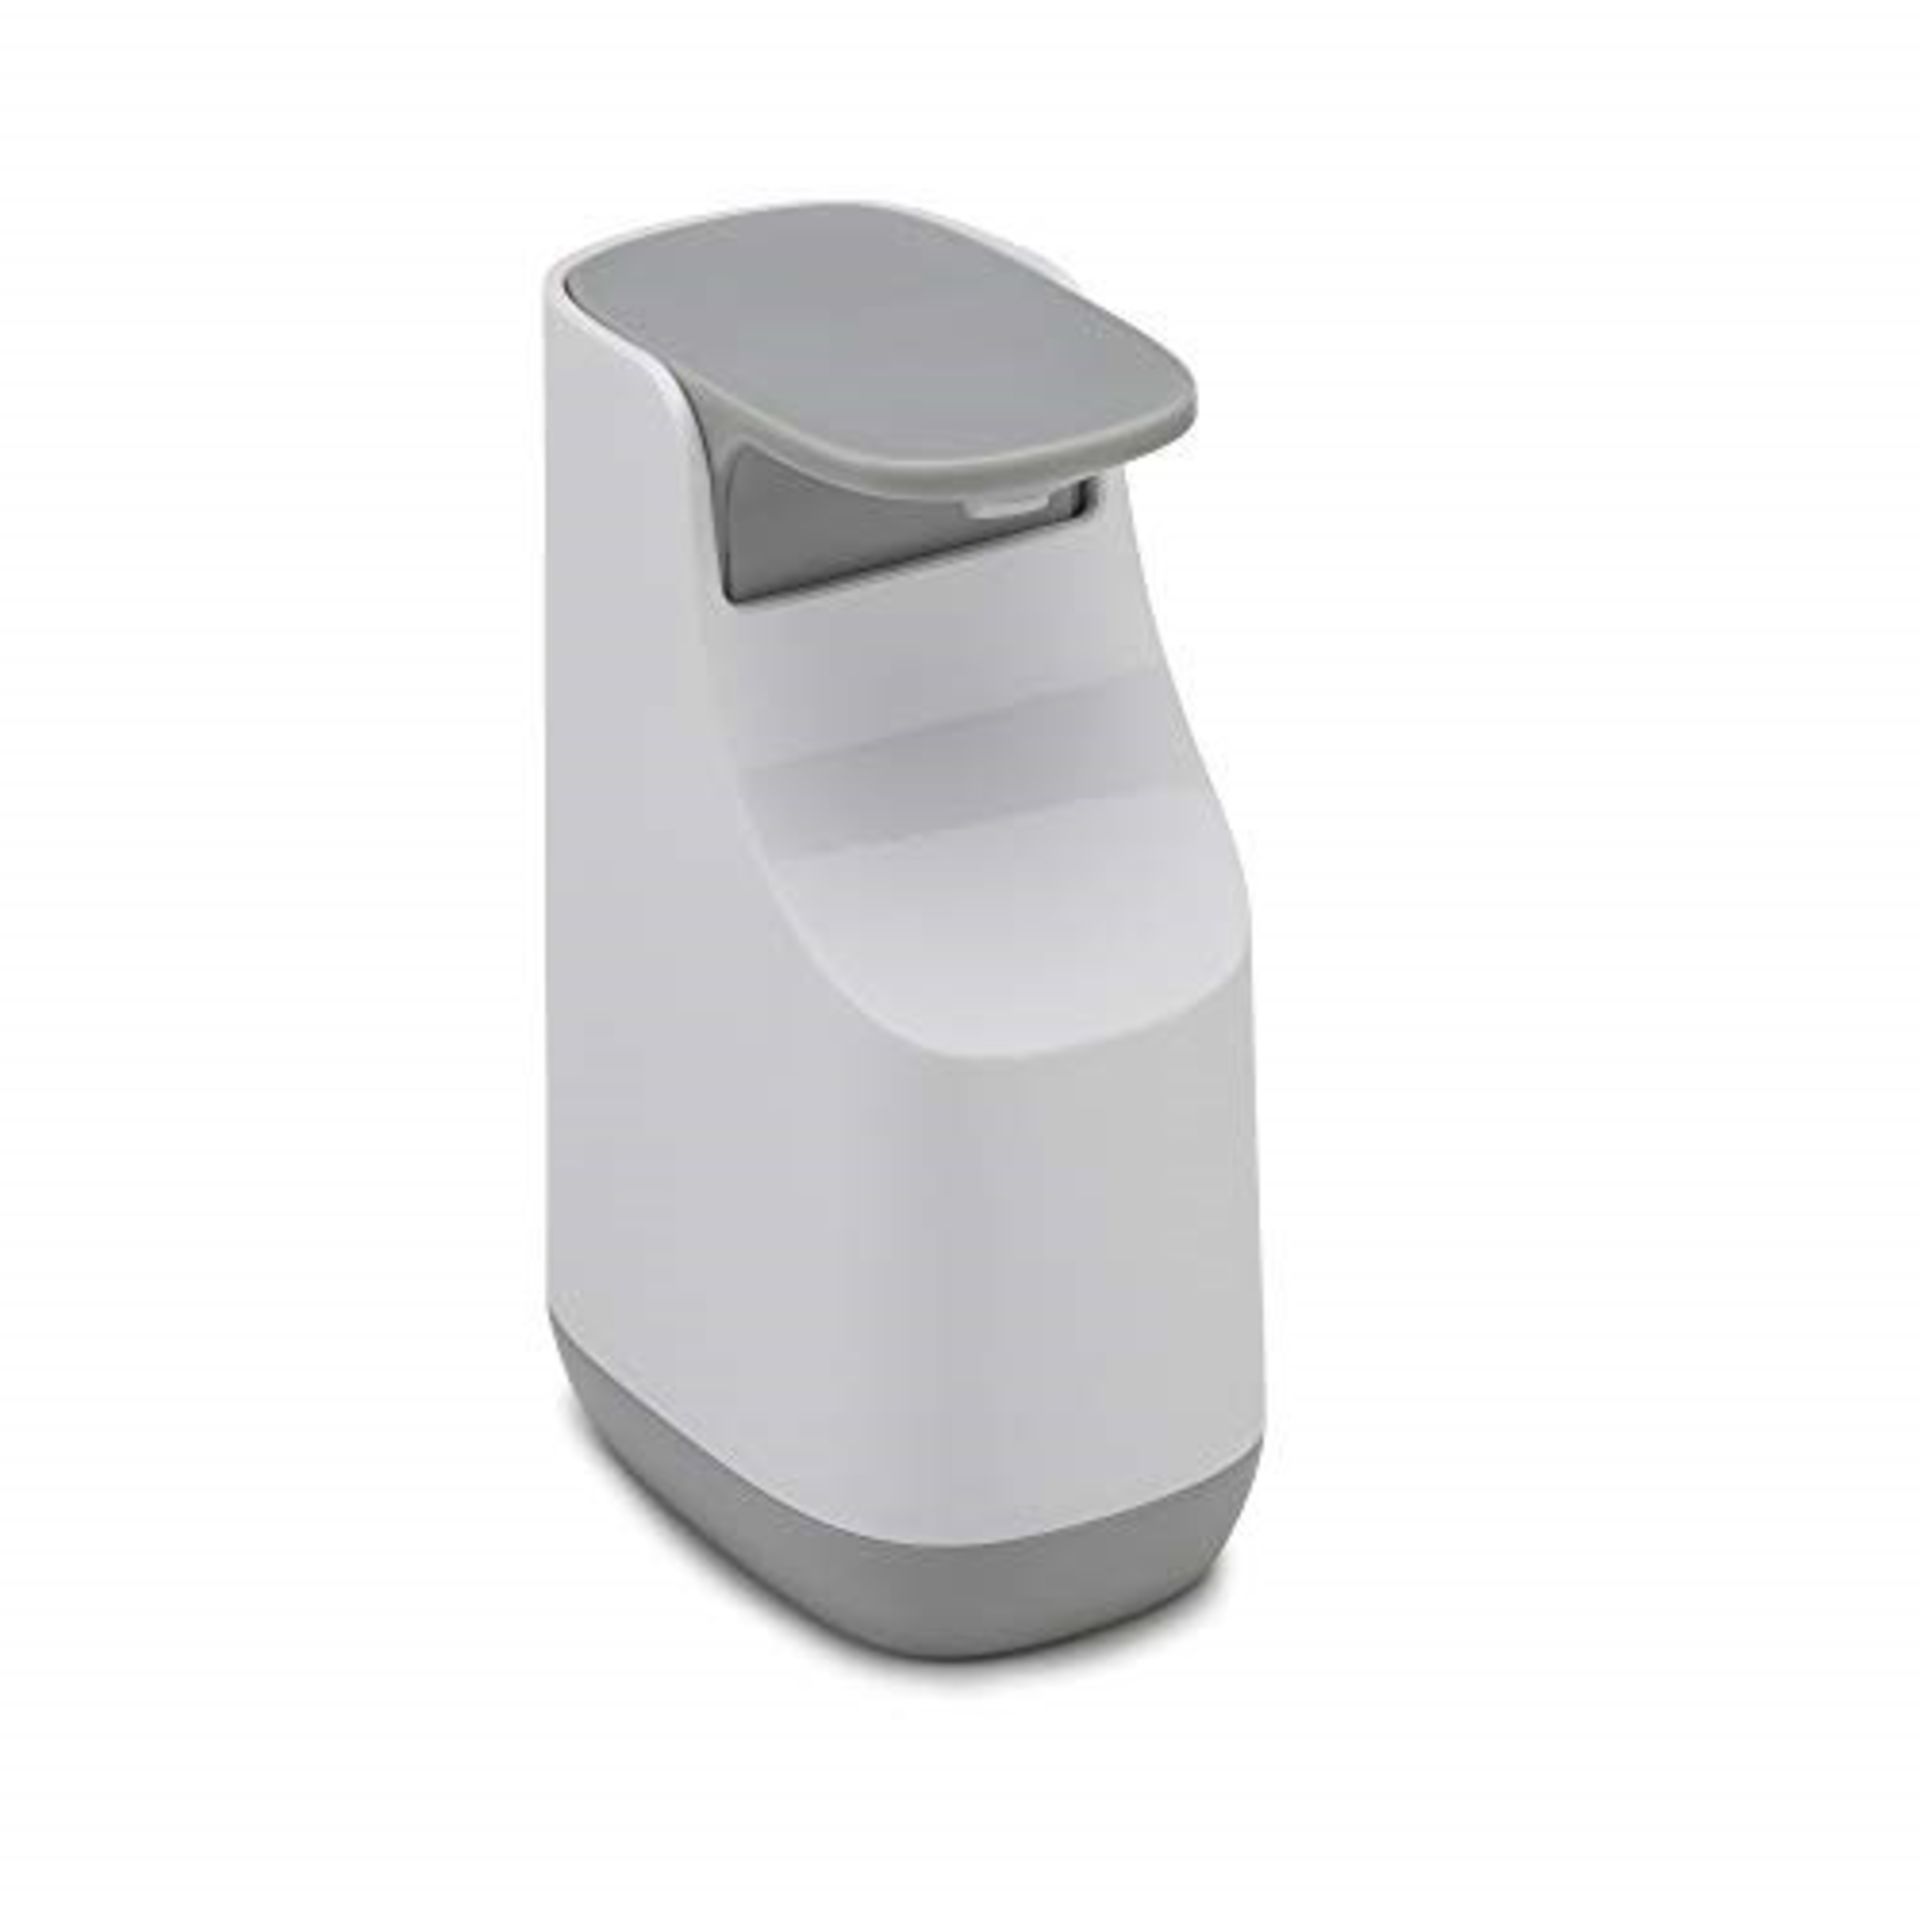 Joseph Joseph 70512 Bathroom Slim Compact Soap Dispenser- White/Grey , 6.2 x 14.1 x 9. - Image 3 of 4